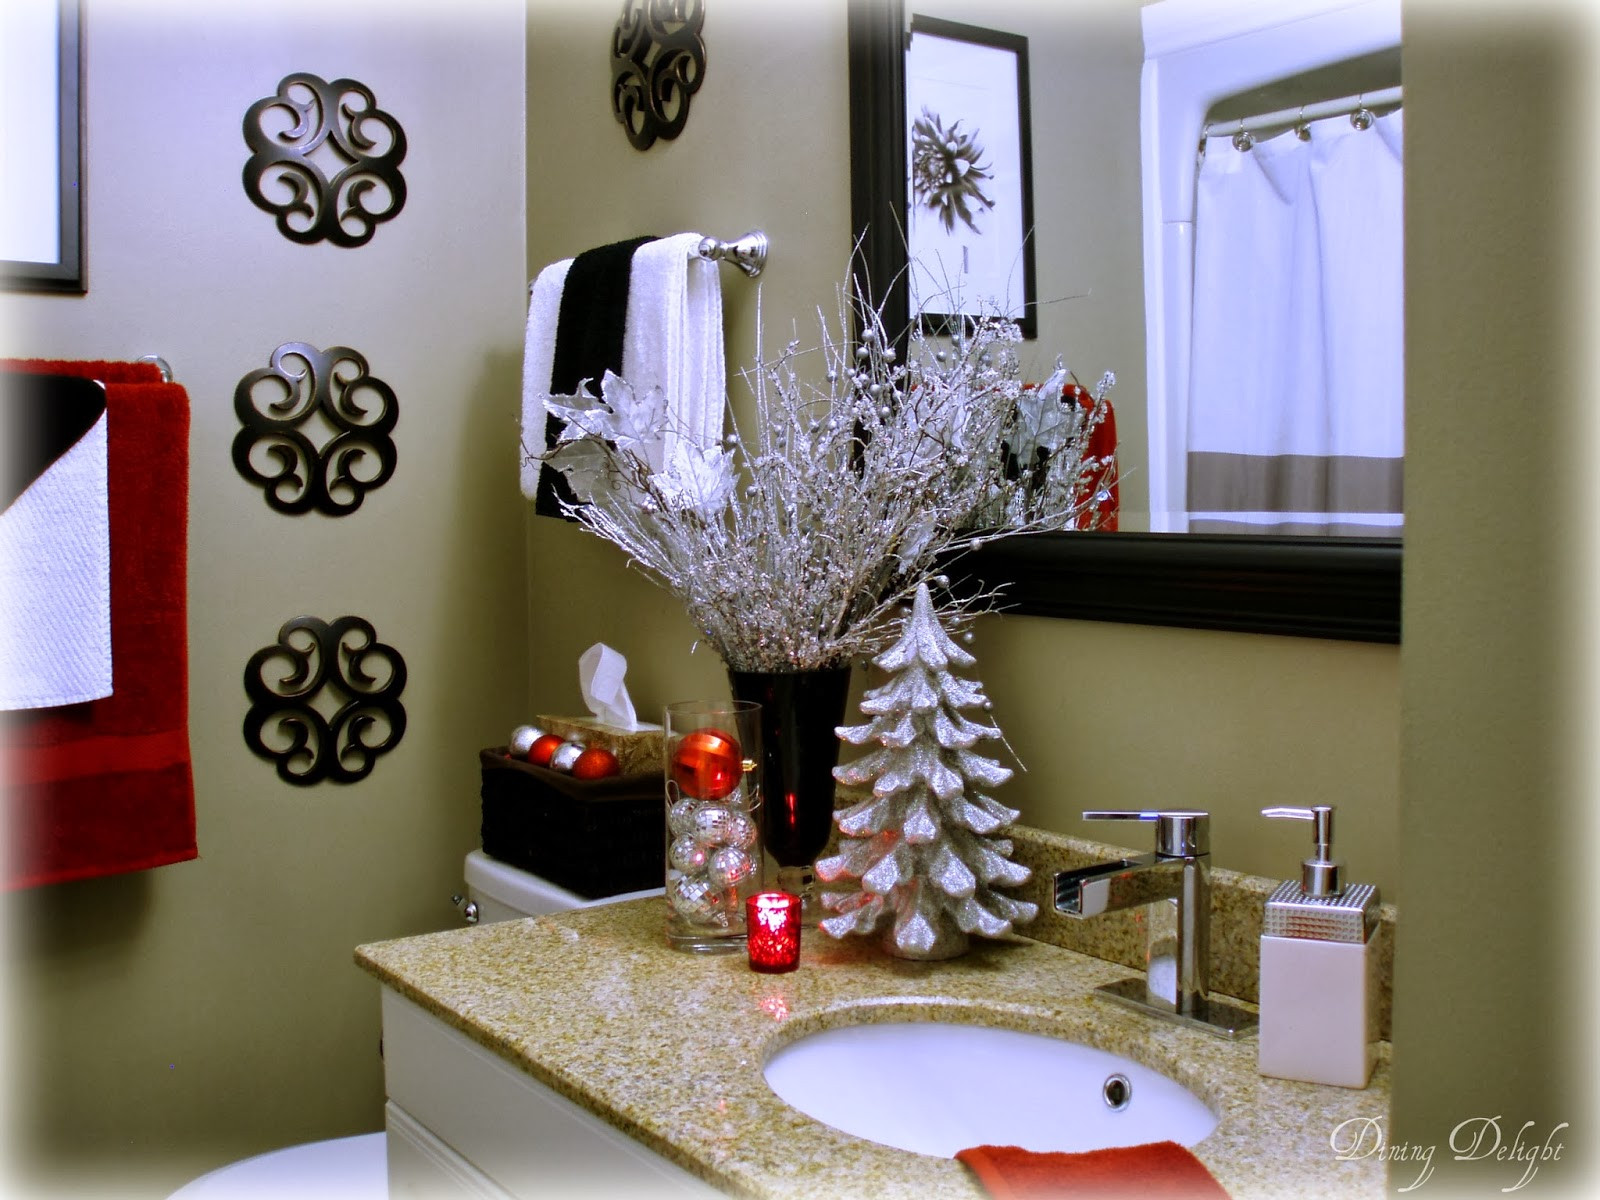 Christmas Bathroom Decor Sets
 Dining Delight Christmas Home Tour 2013